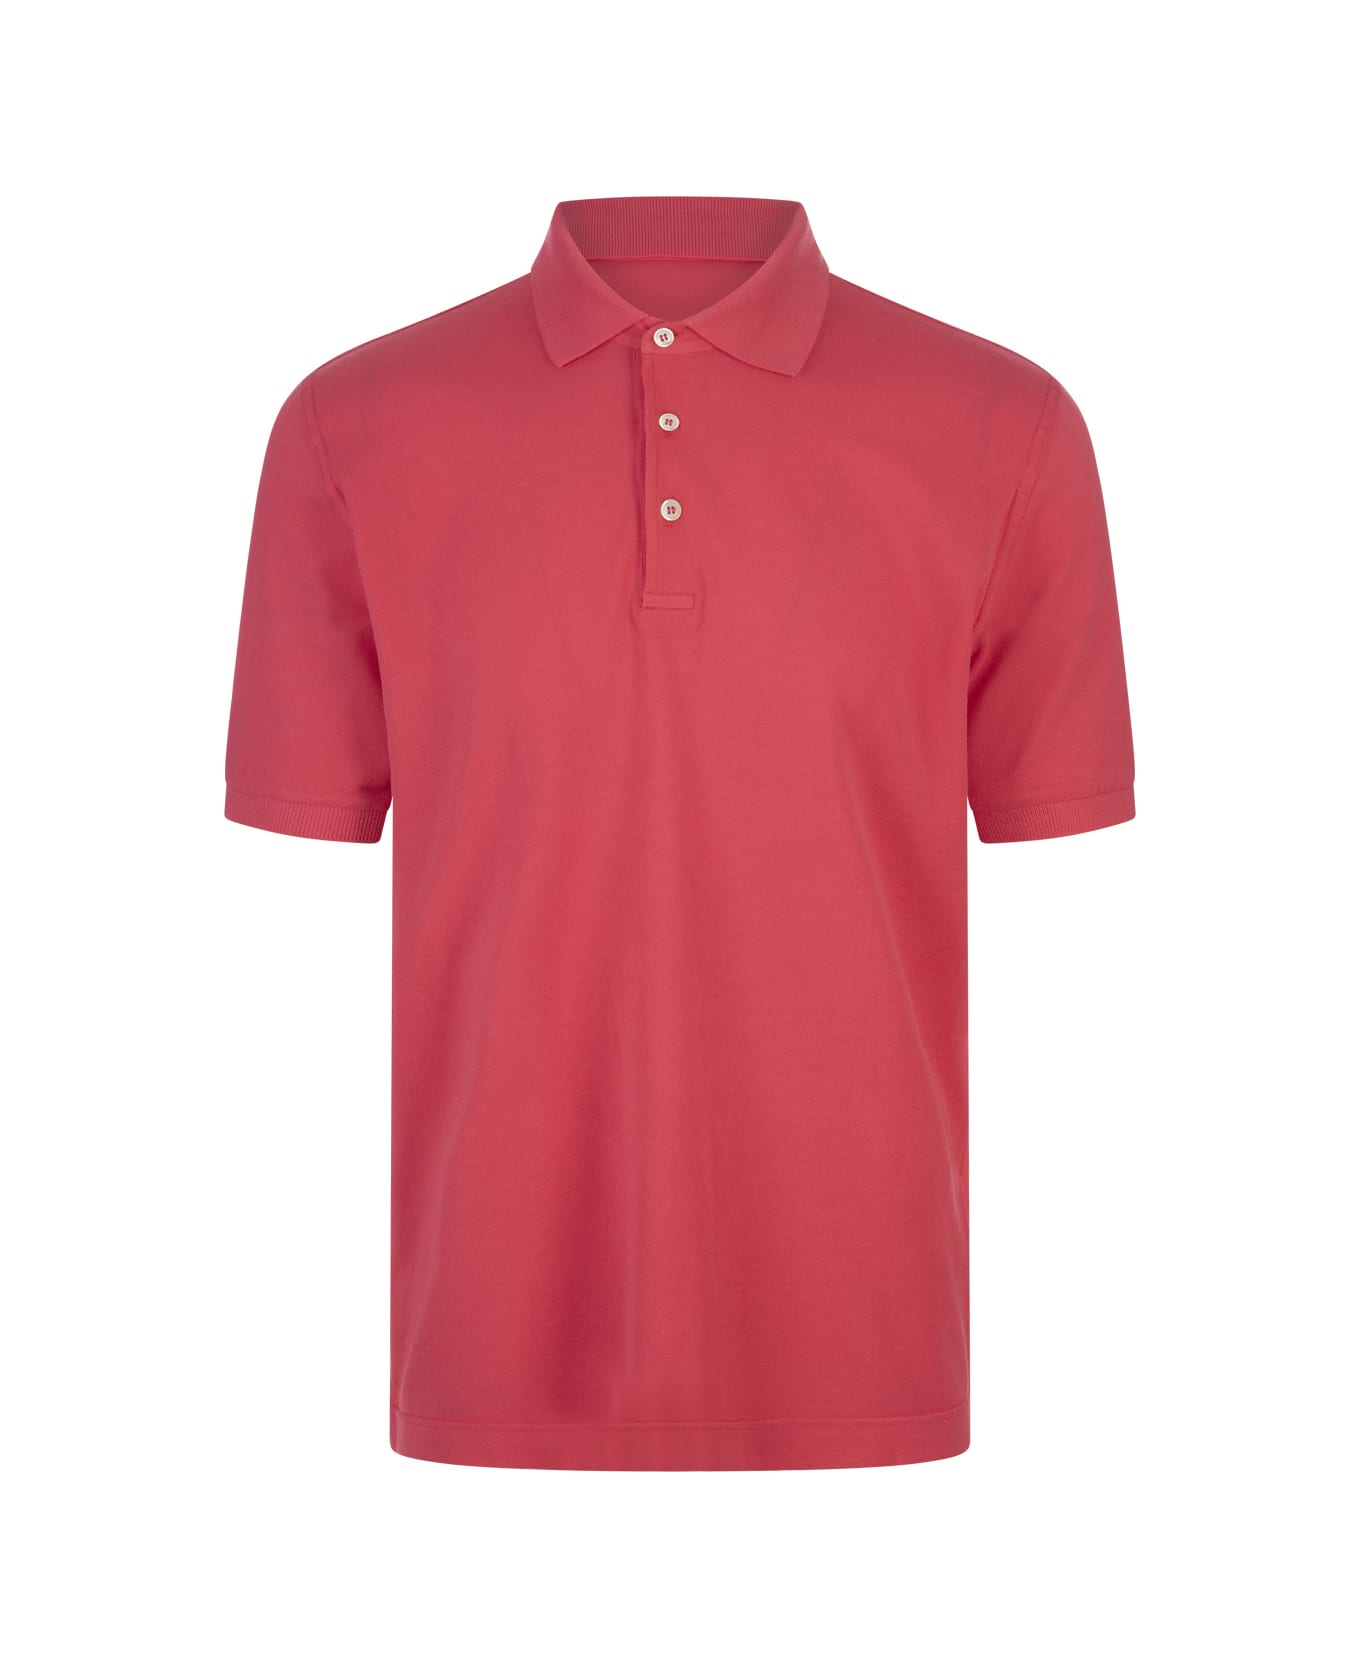 Fedeli Red Cotton Pique Polo Shirt - Red